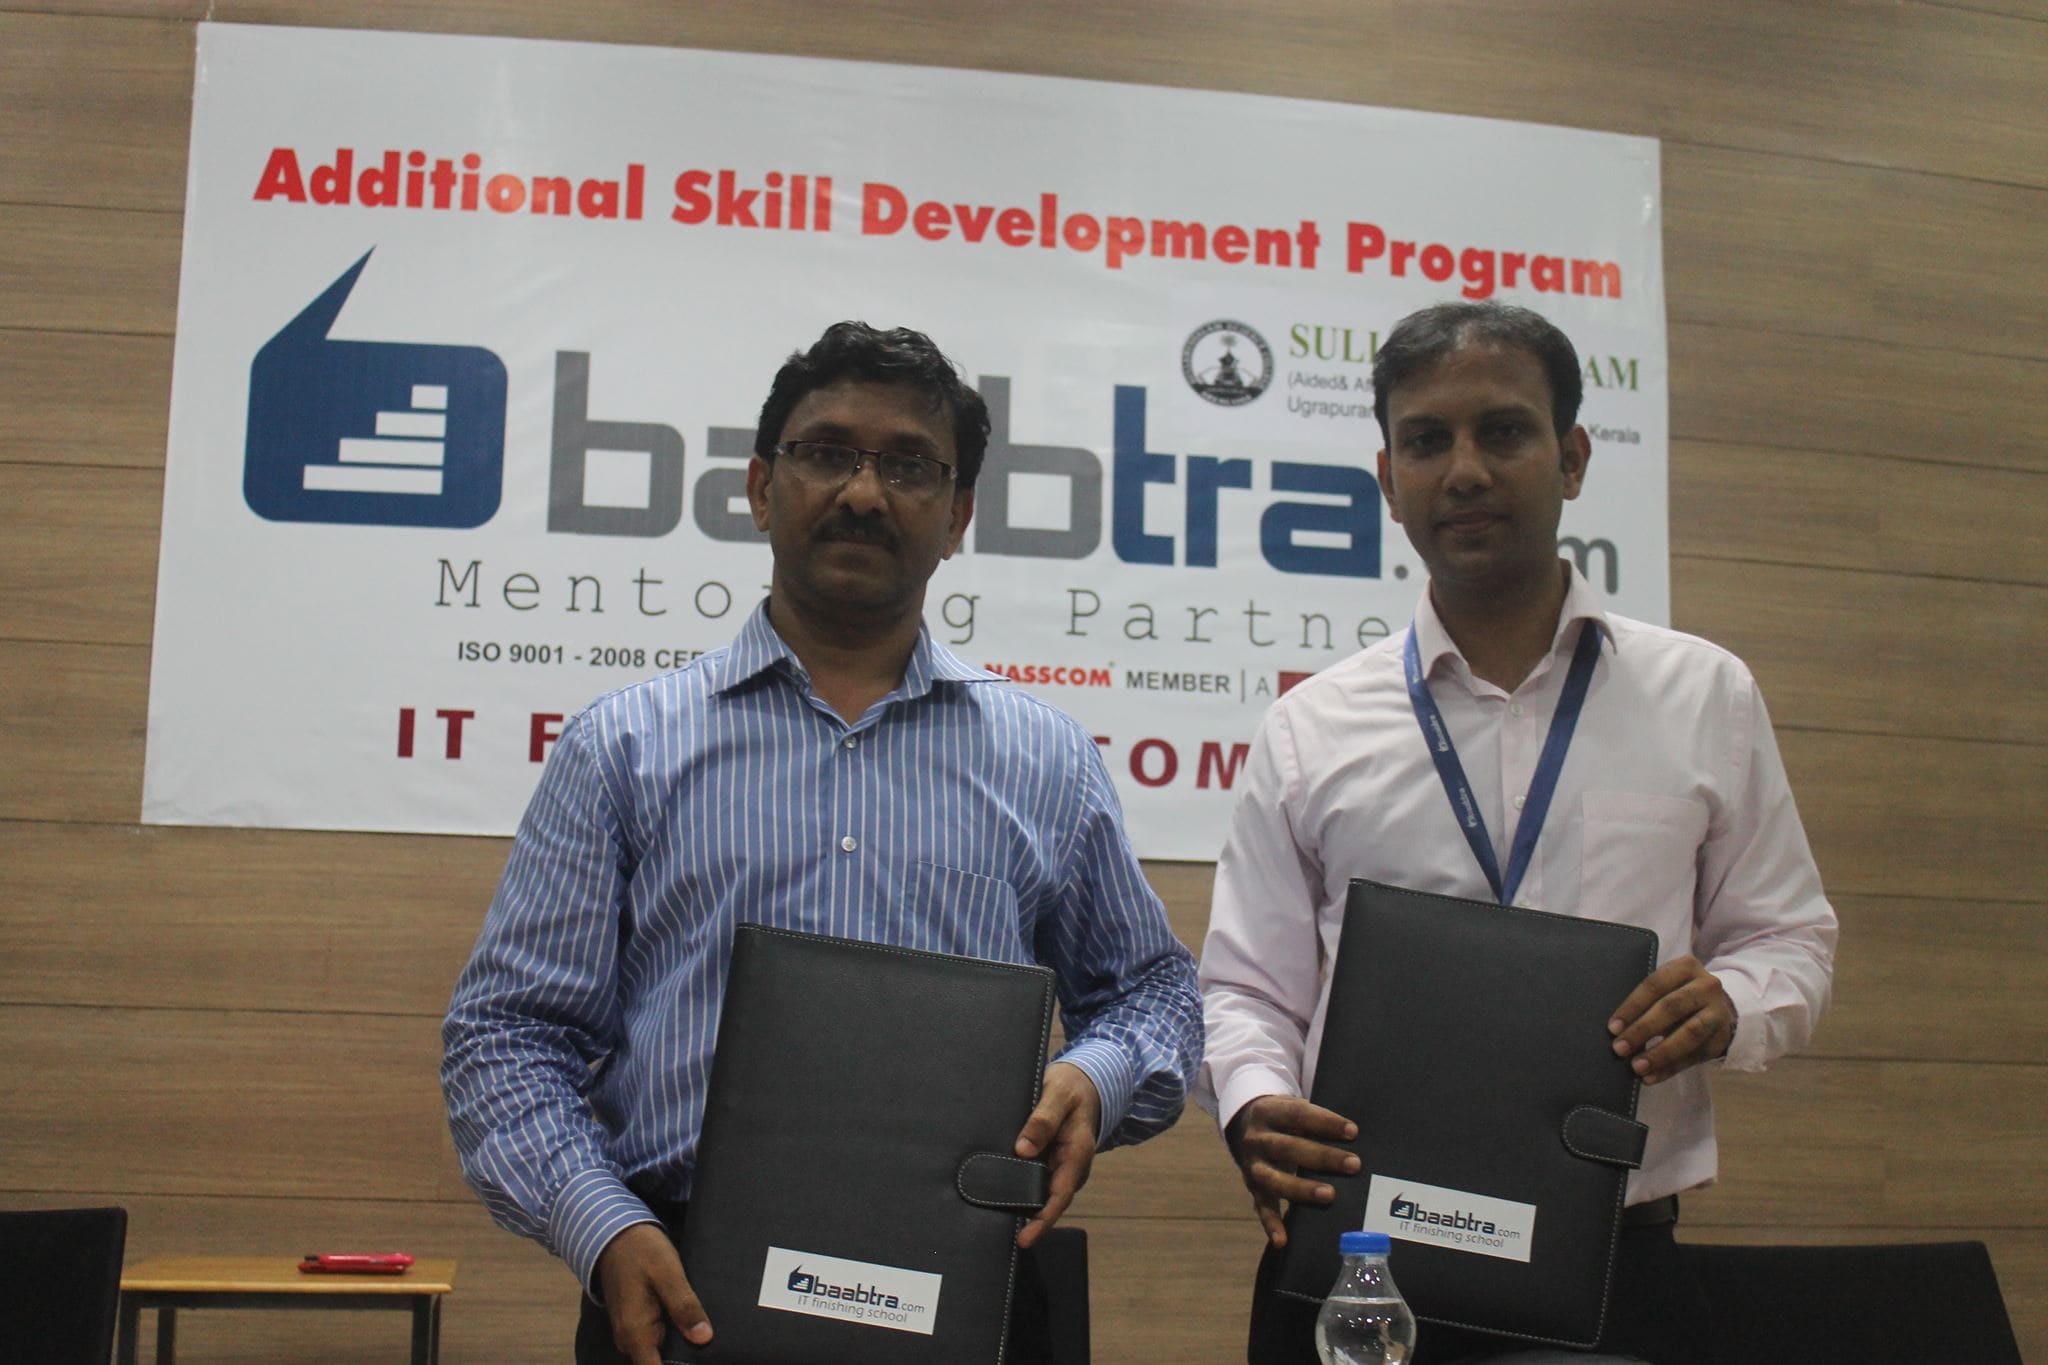 additional skill development program baabtra 2014